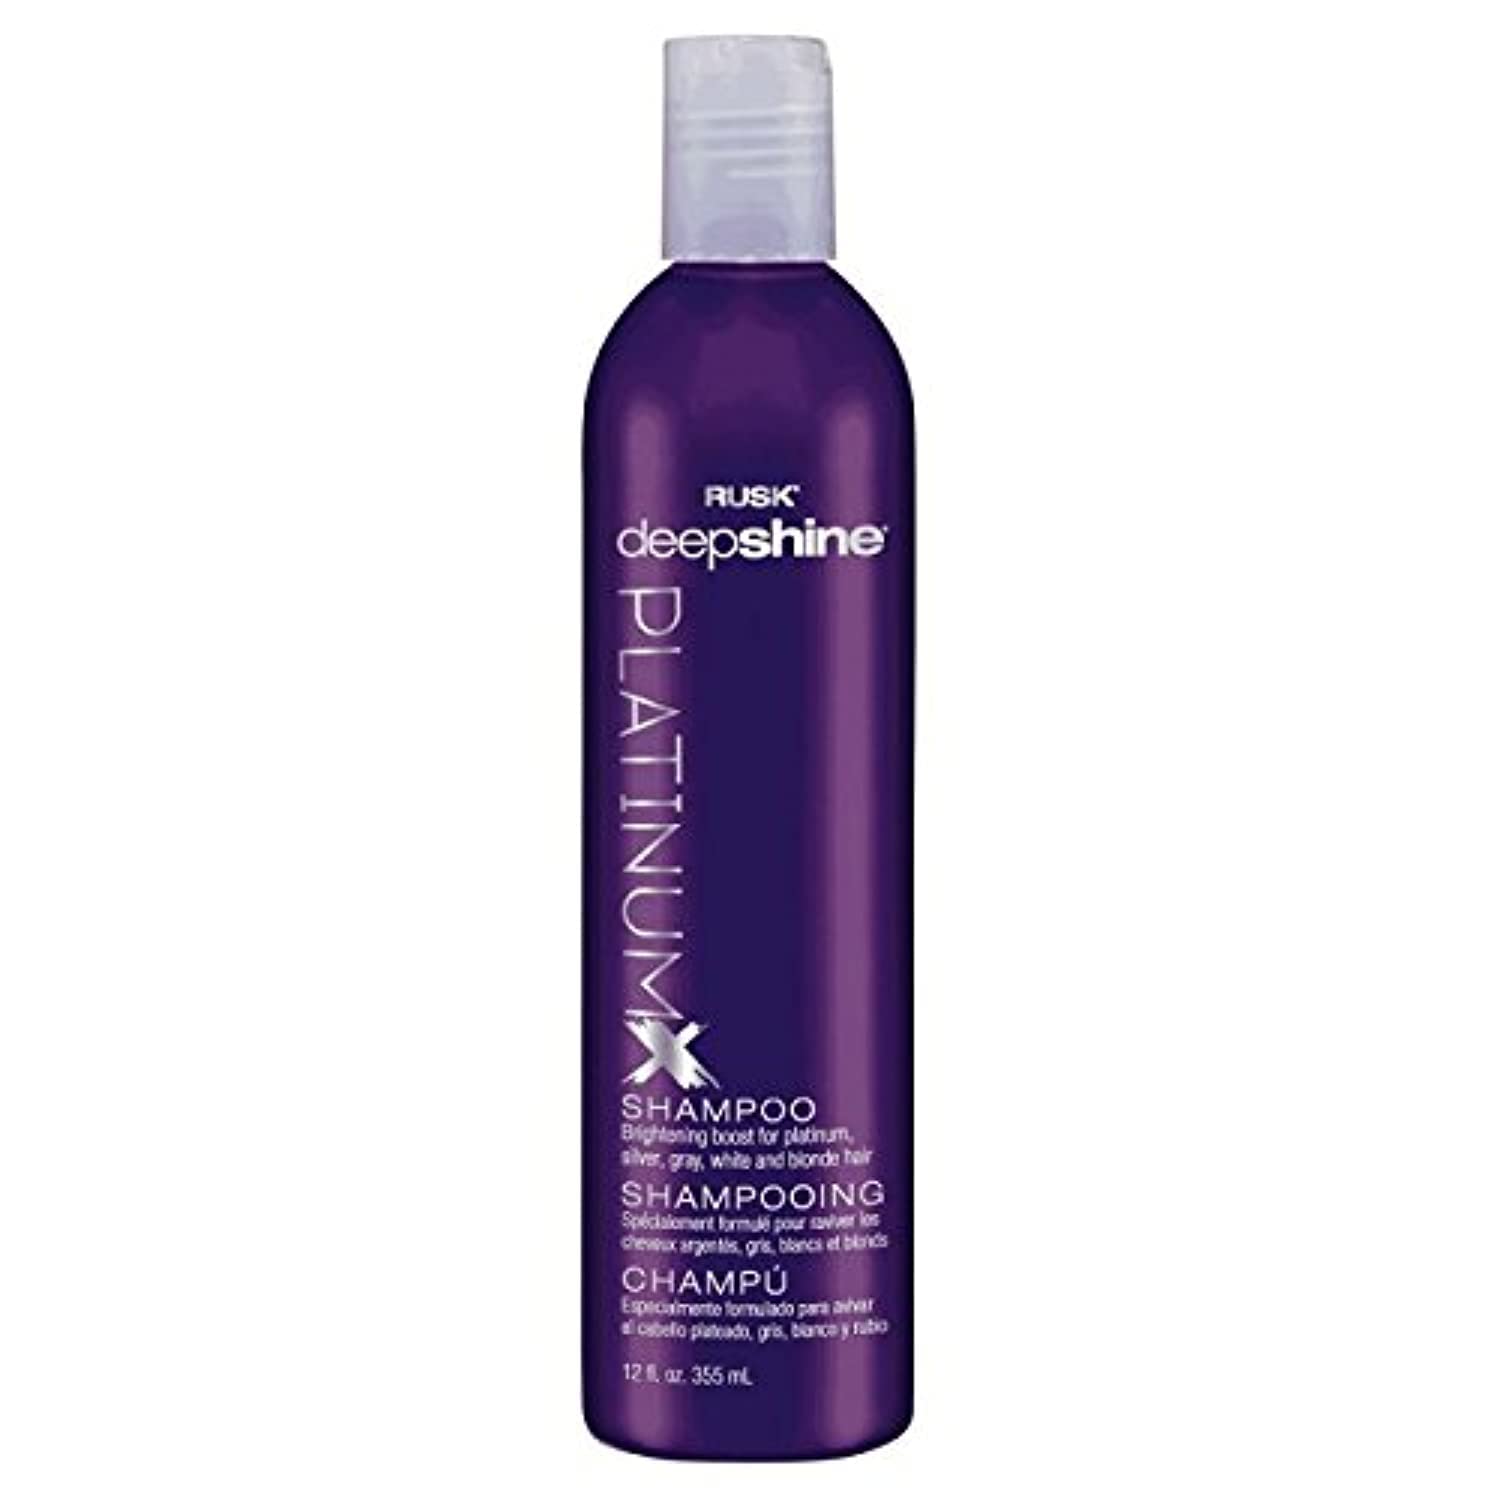 RUSK Deepshine Platinum Shampoo Oz Gentle Cleansing [...]